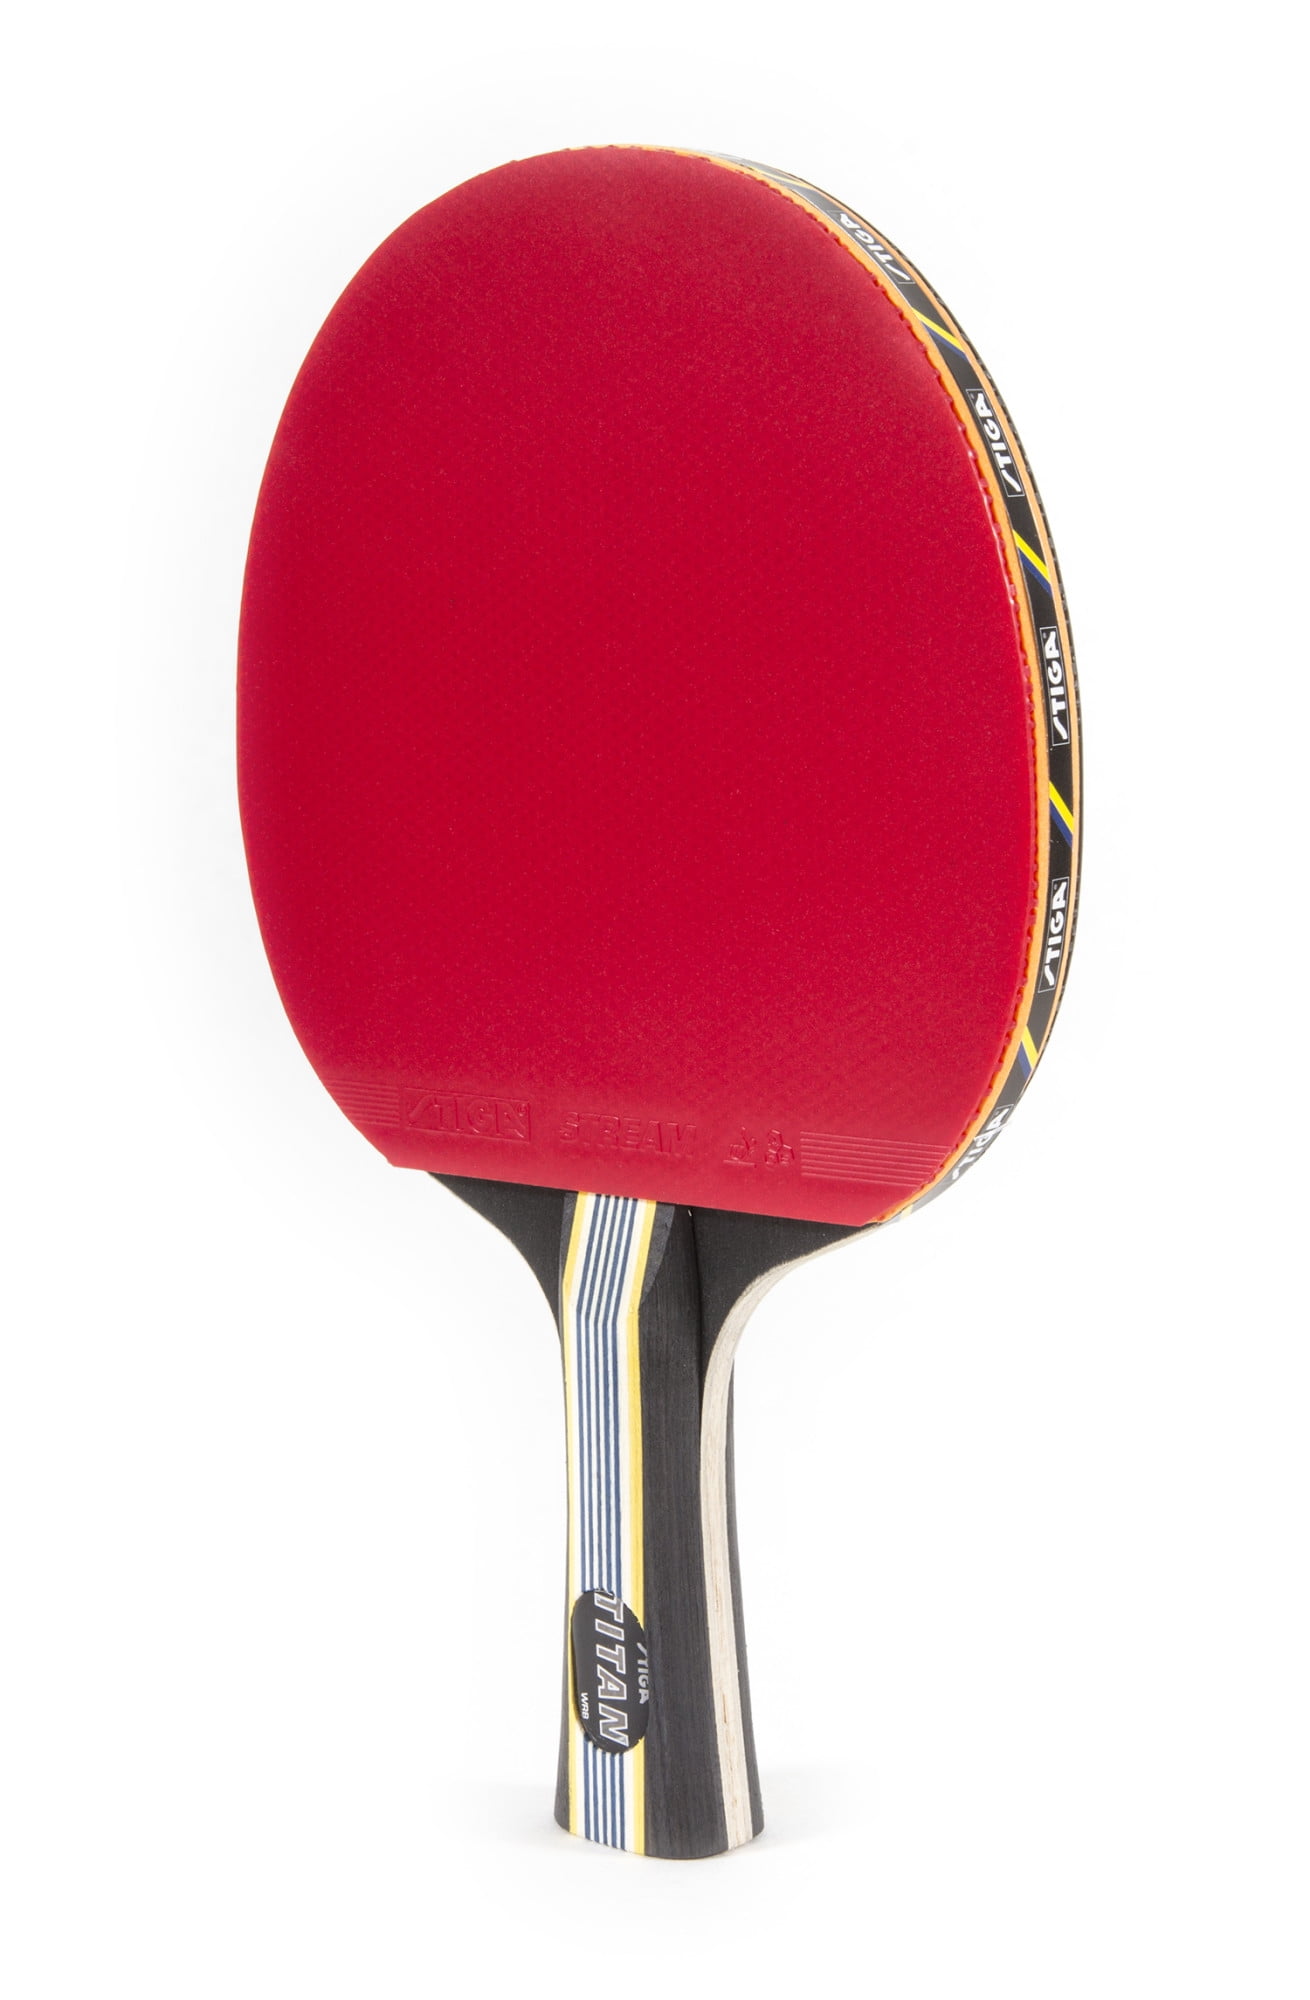 Stiga Evolution Premium Ping Pong Table Tennis Paddle Racket 